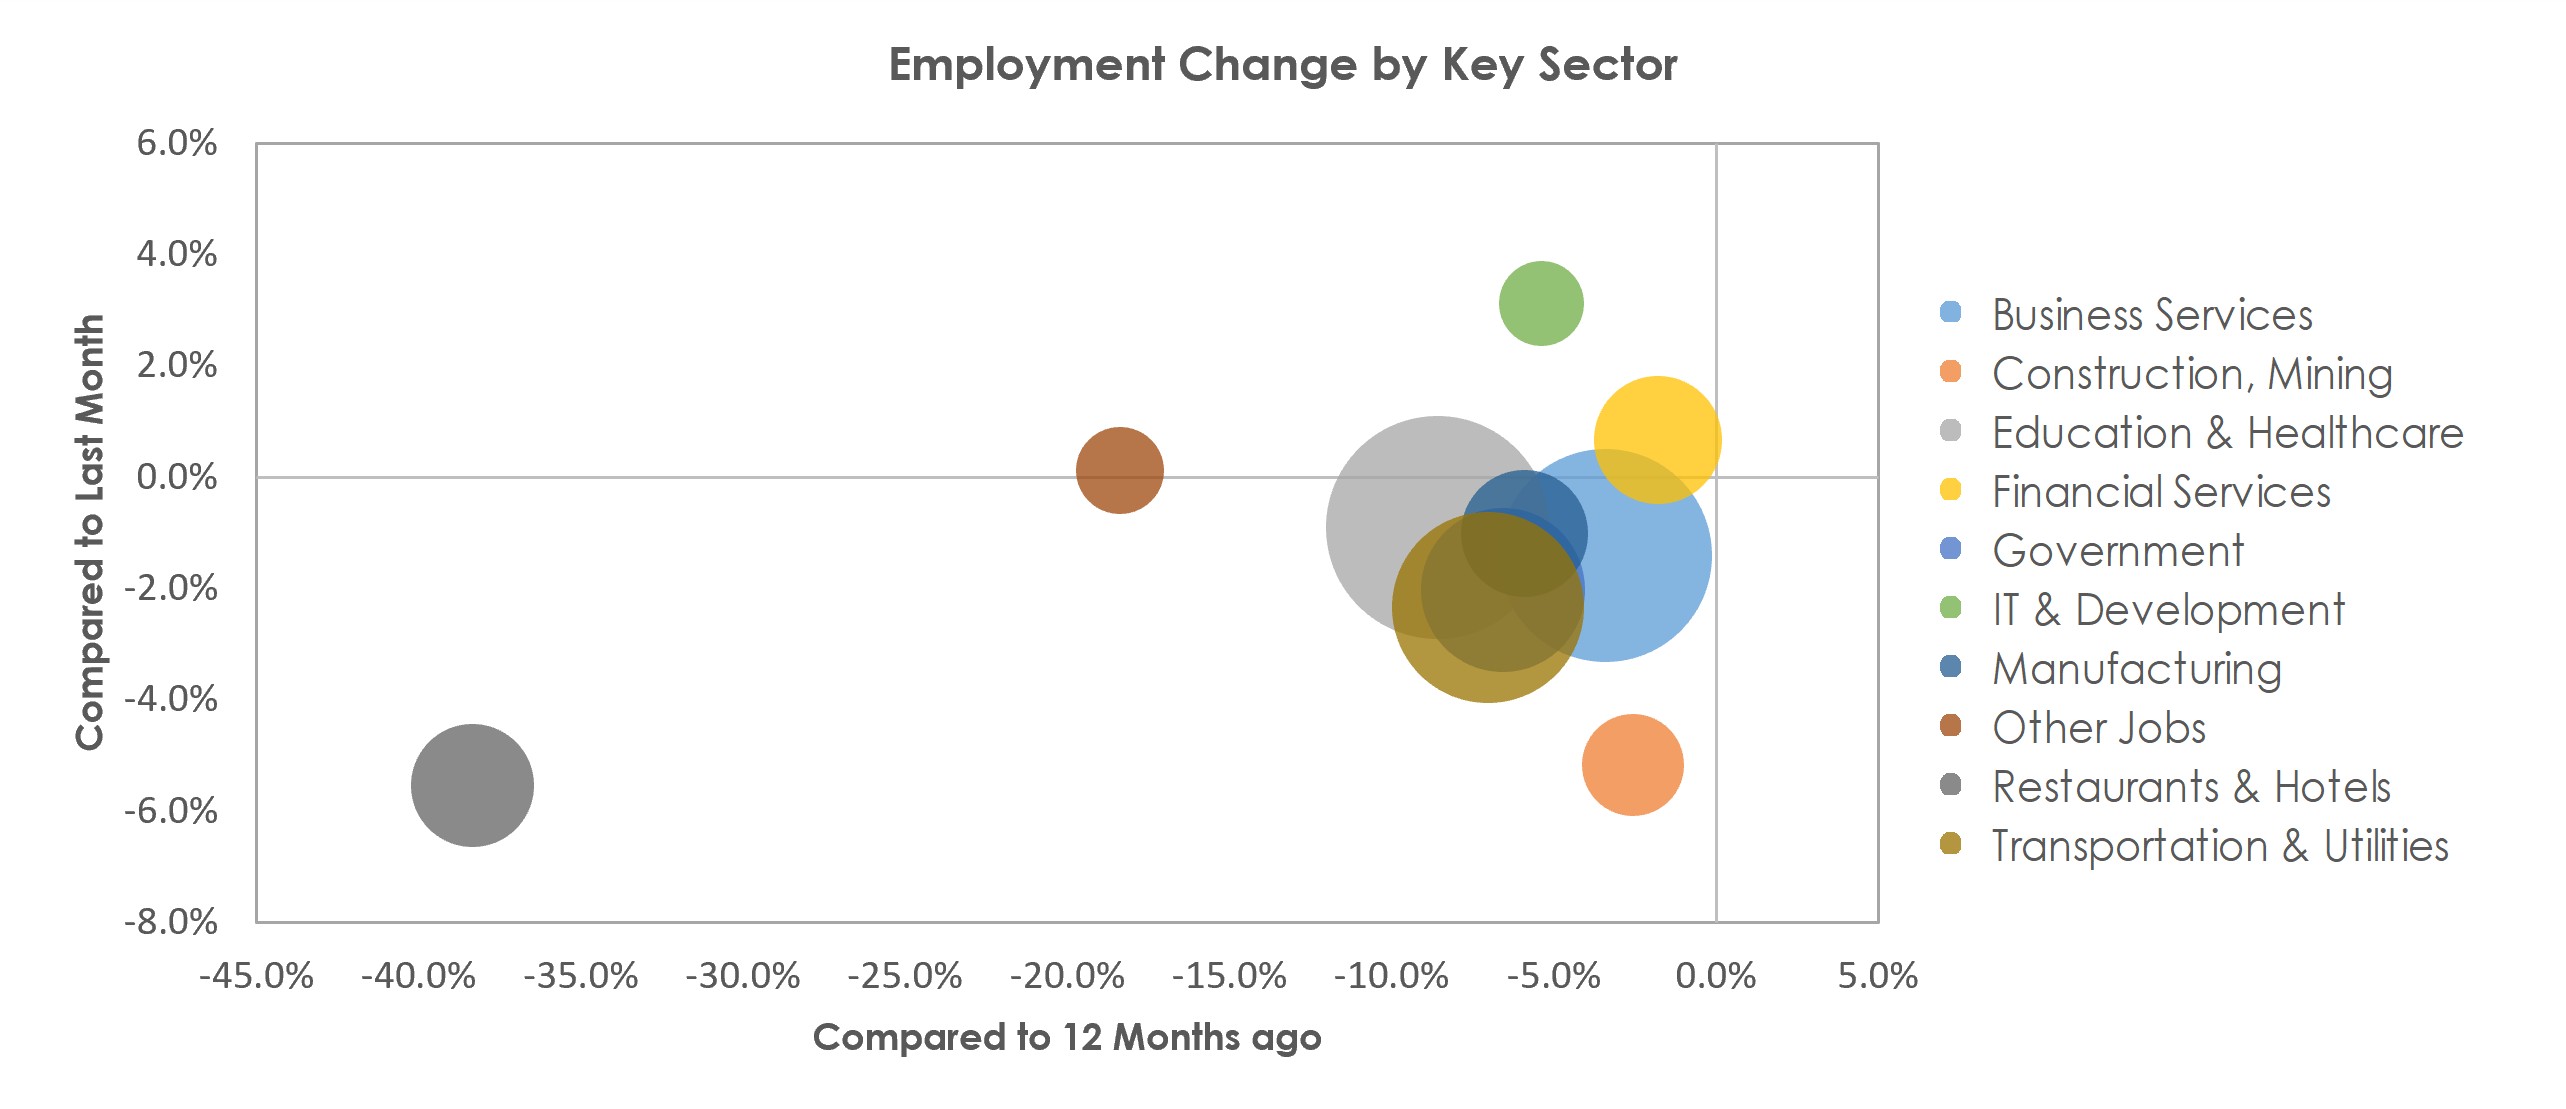 Boston-Cambridge-Nashua, MA-NH Unemployment by Industry January 2021